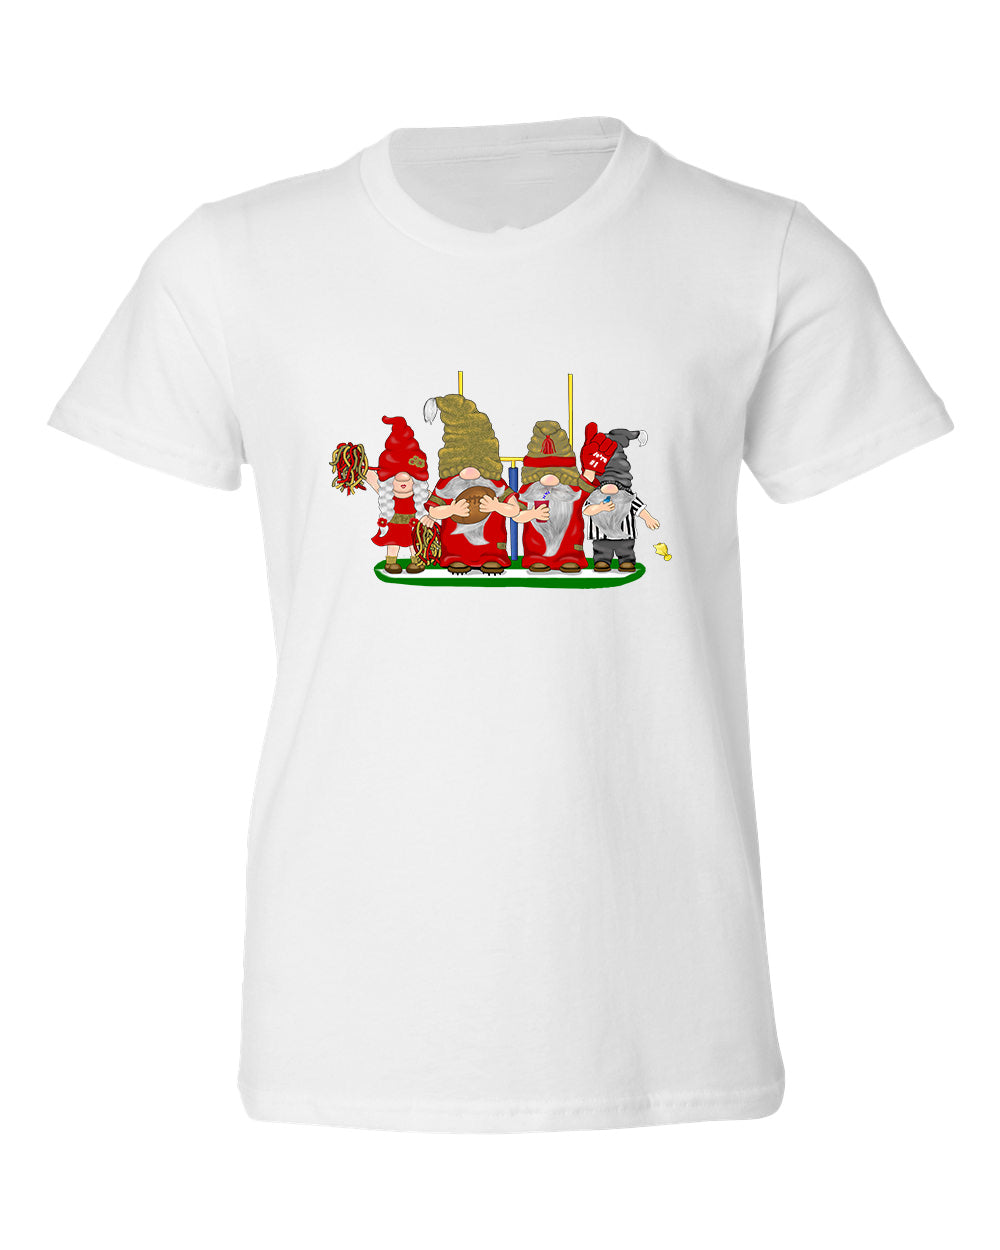 Red & Gold Football Gnomes  (similar to San Fransisco) on Kids T-shirt